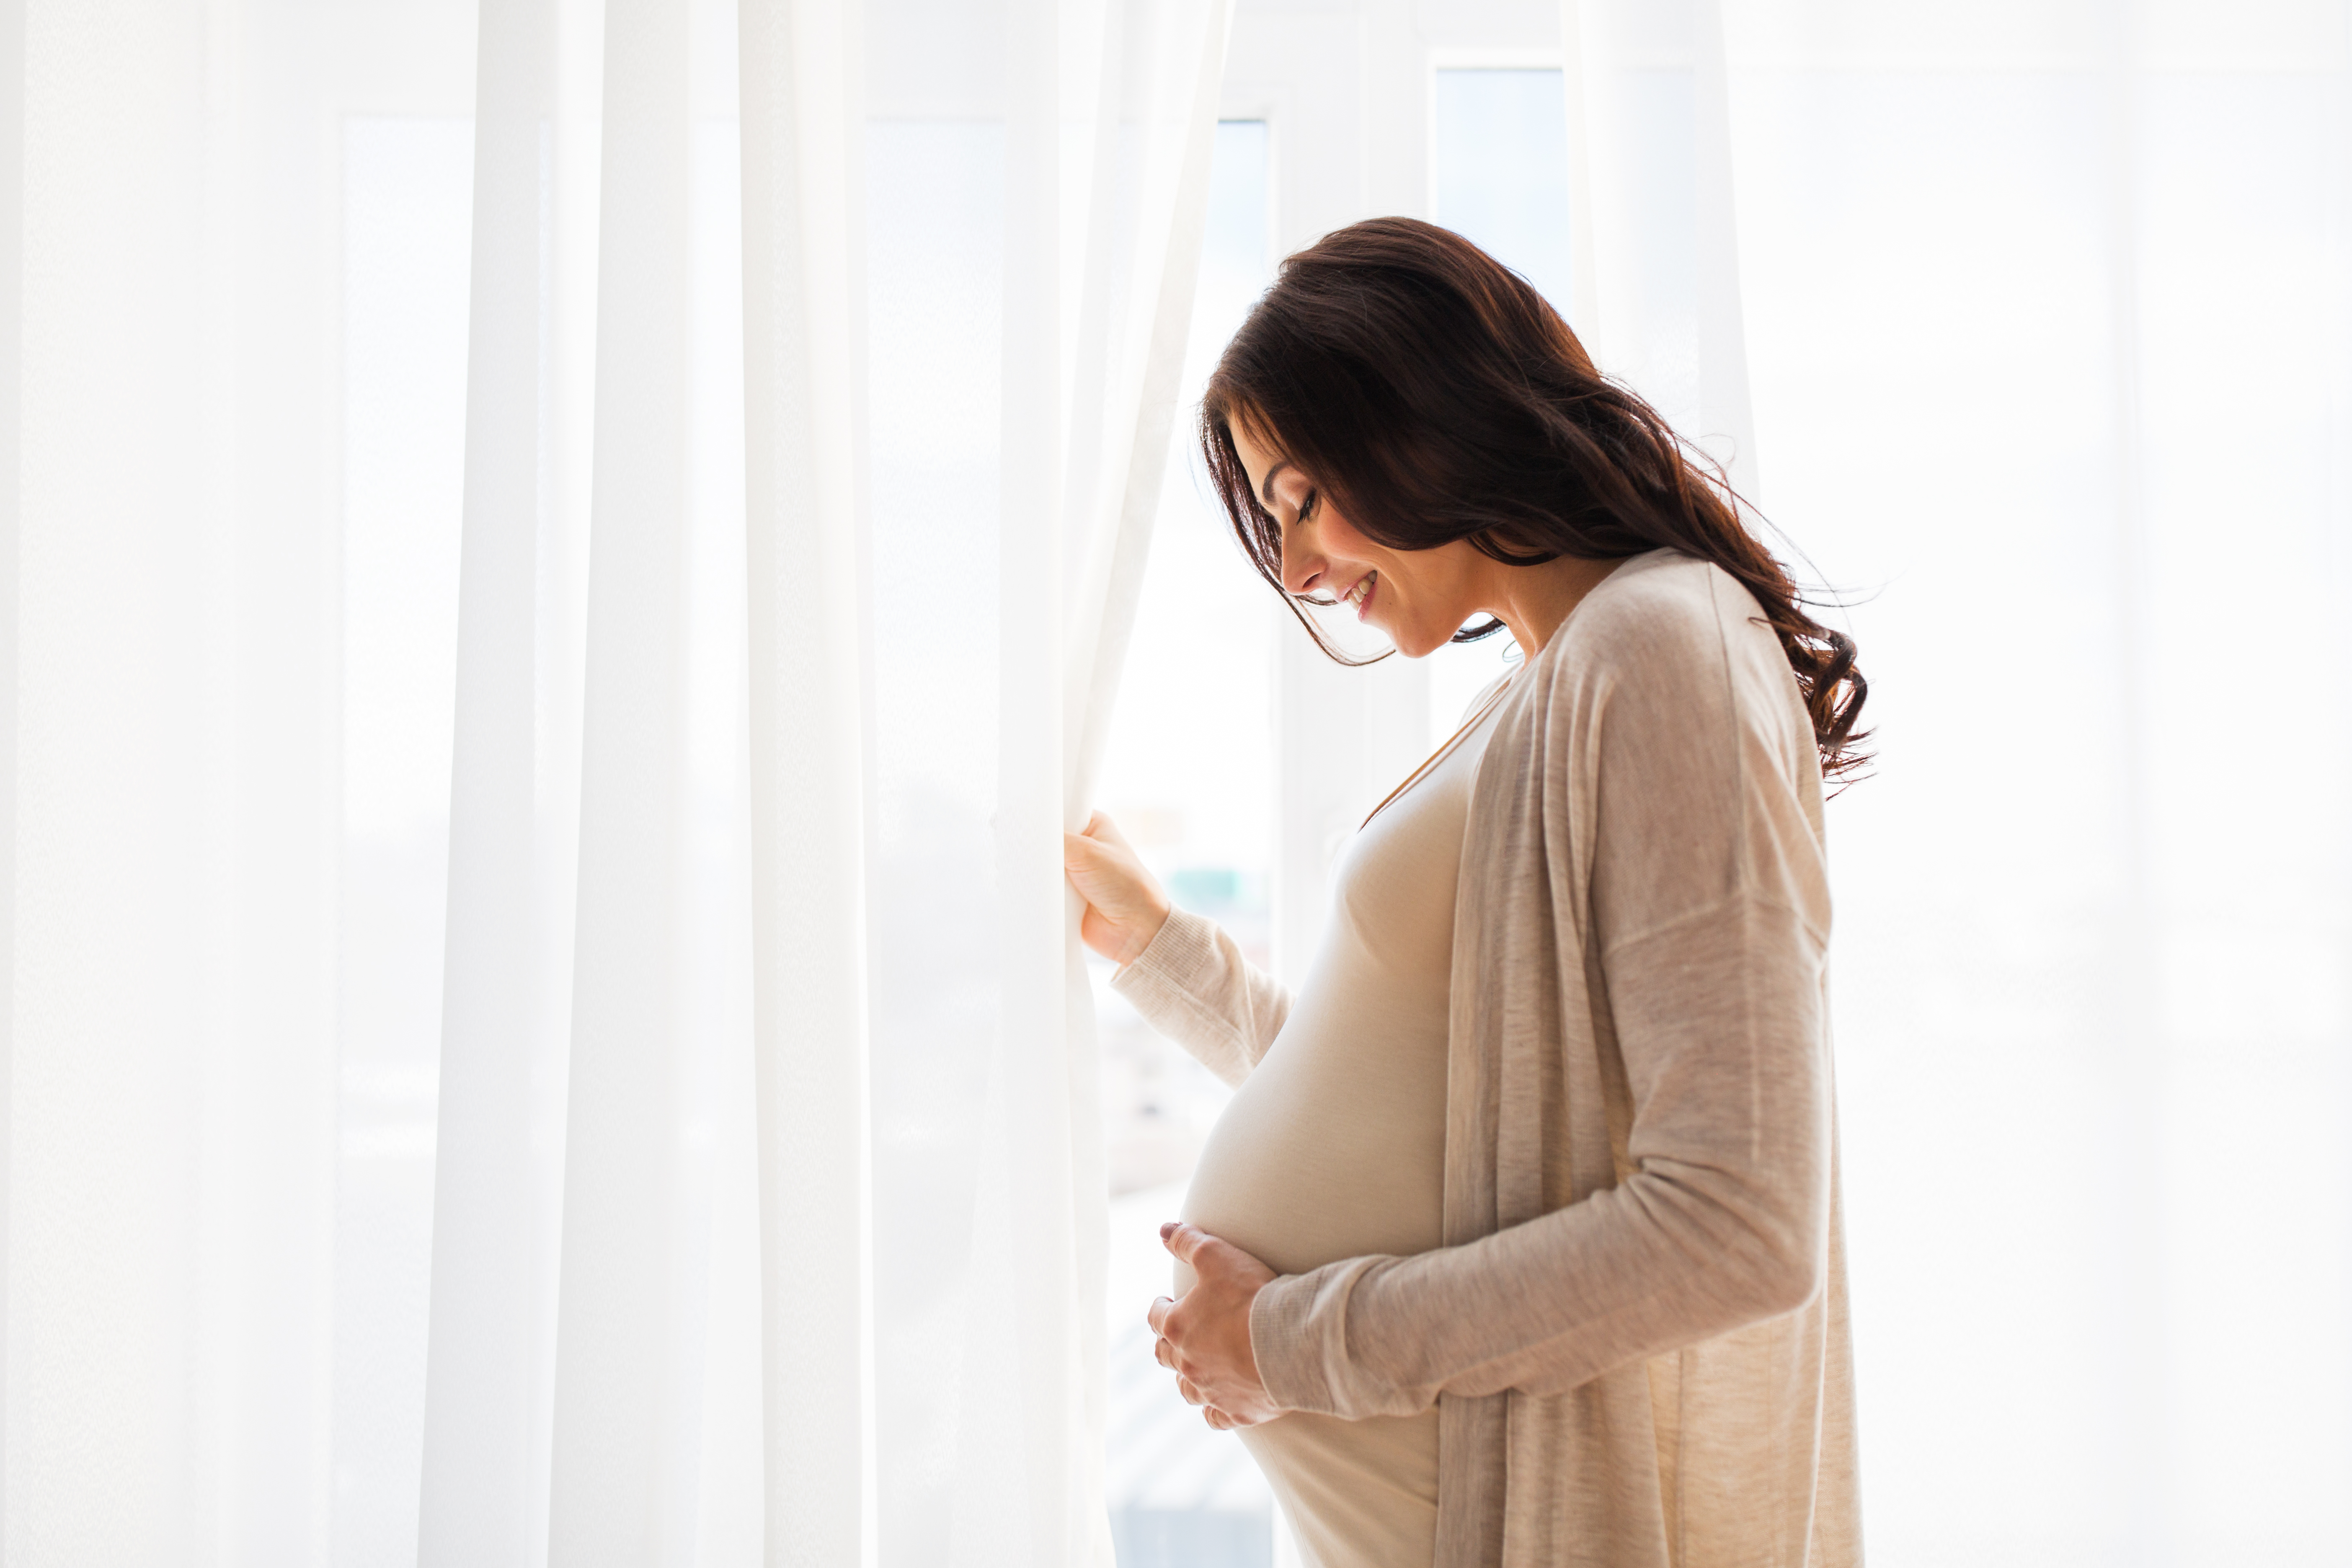 A pregnant woman standing near a window | Source: Shutterstock